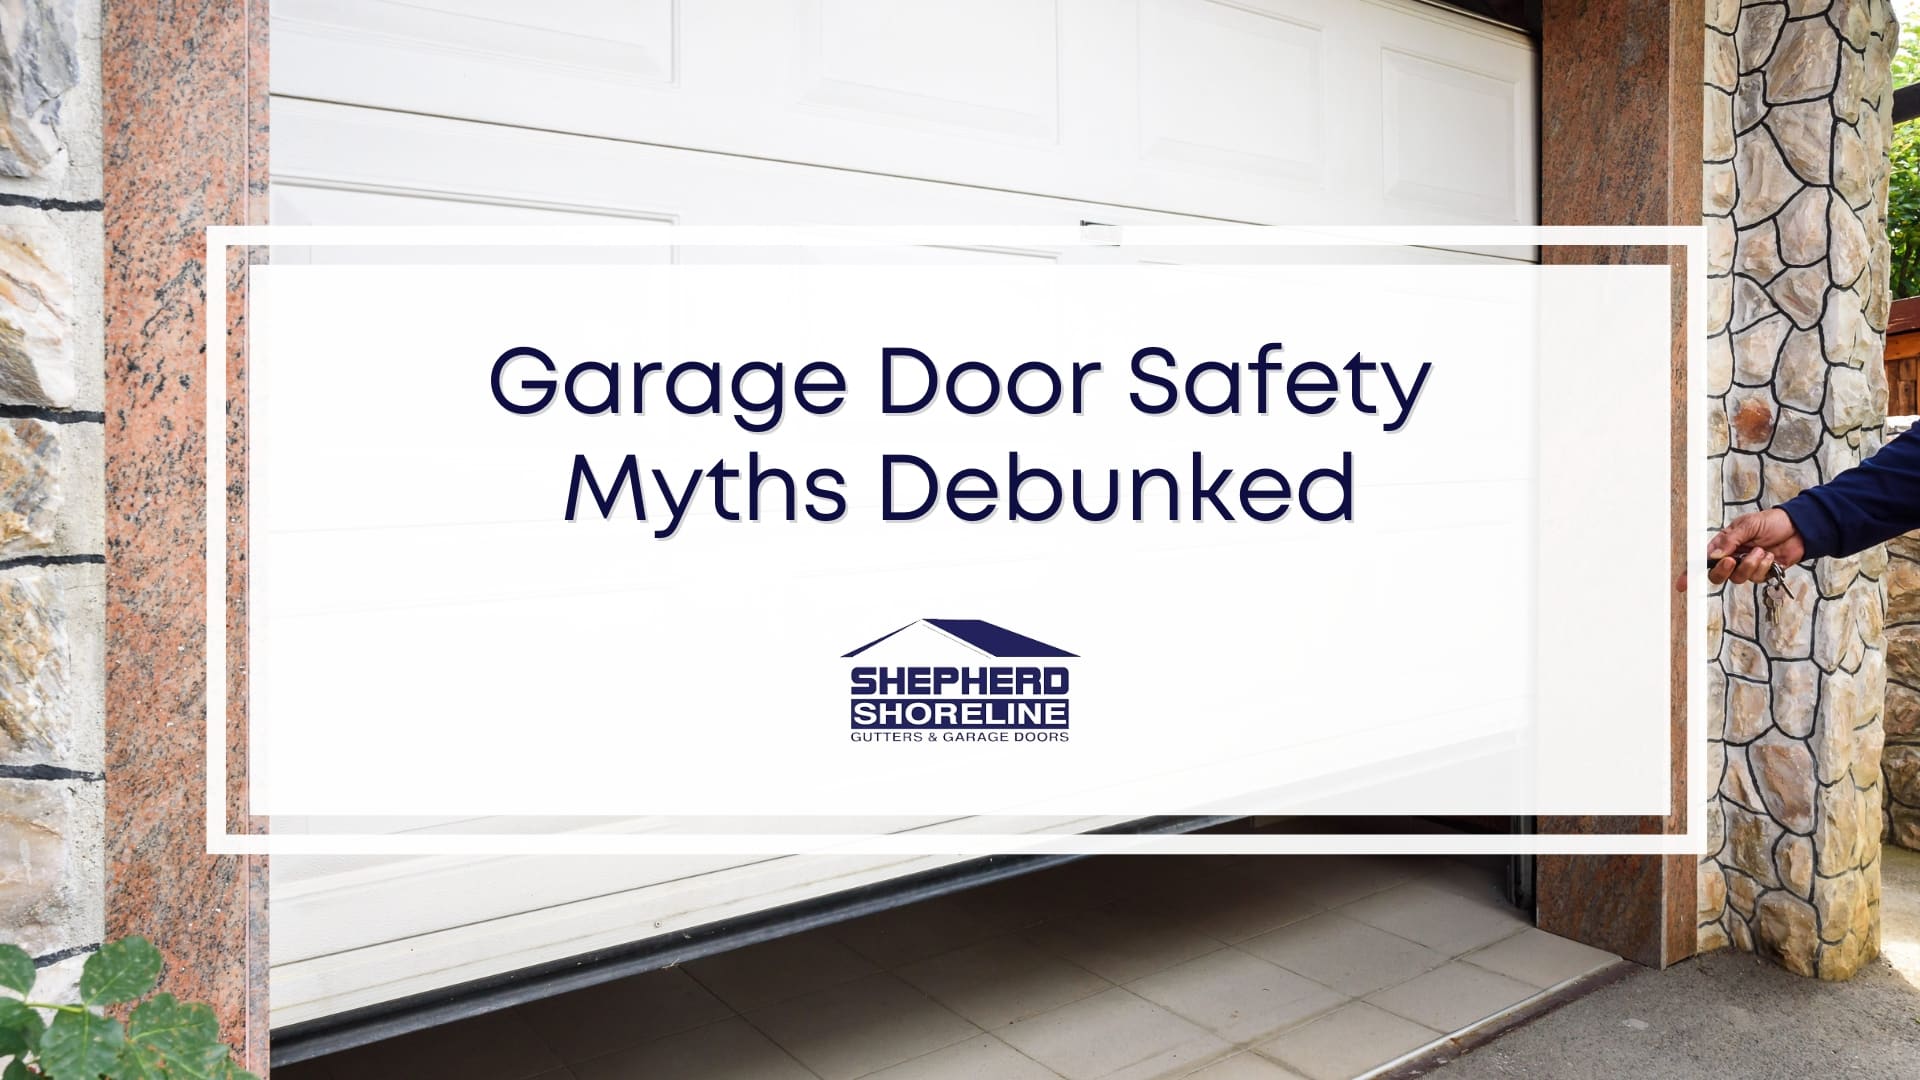 Featured image of garage door safety myths debunked